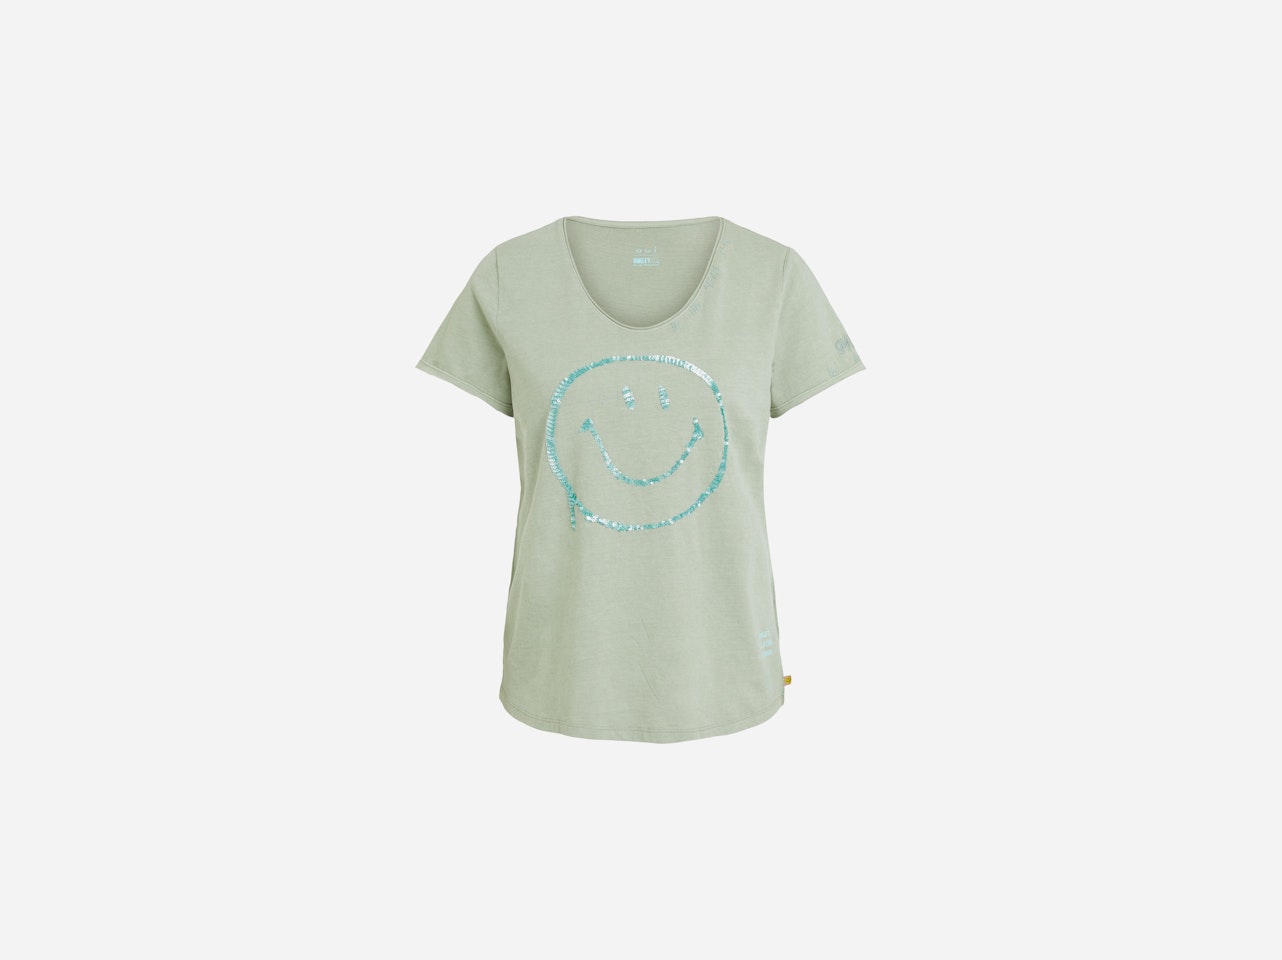 Bild 9 von T-shirt oui x Smiley® with sequins in salvia | Oui